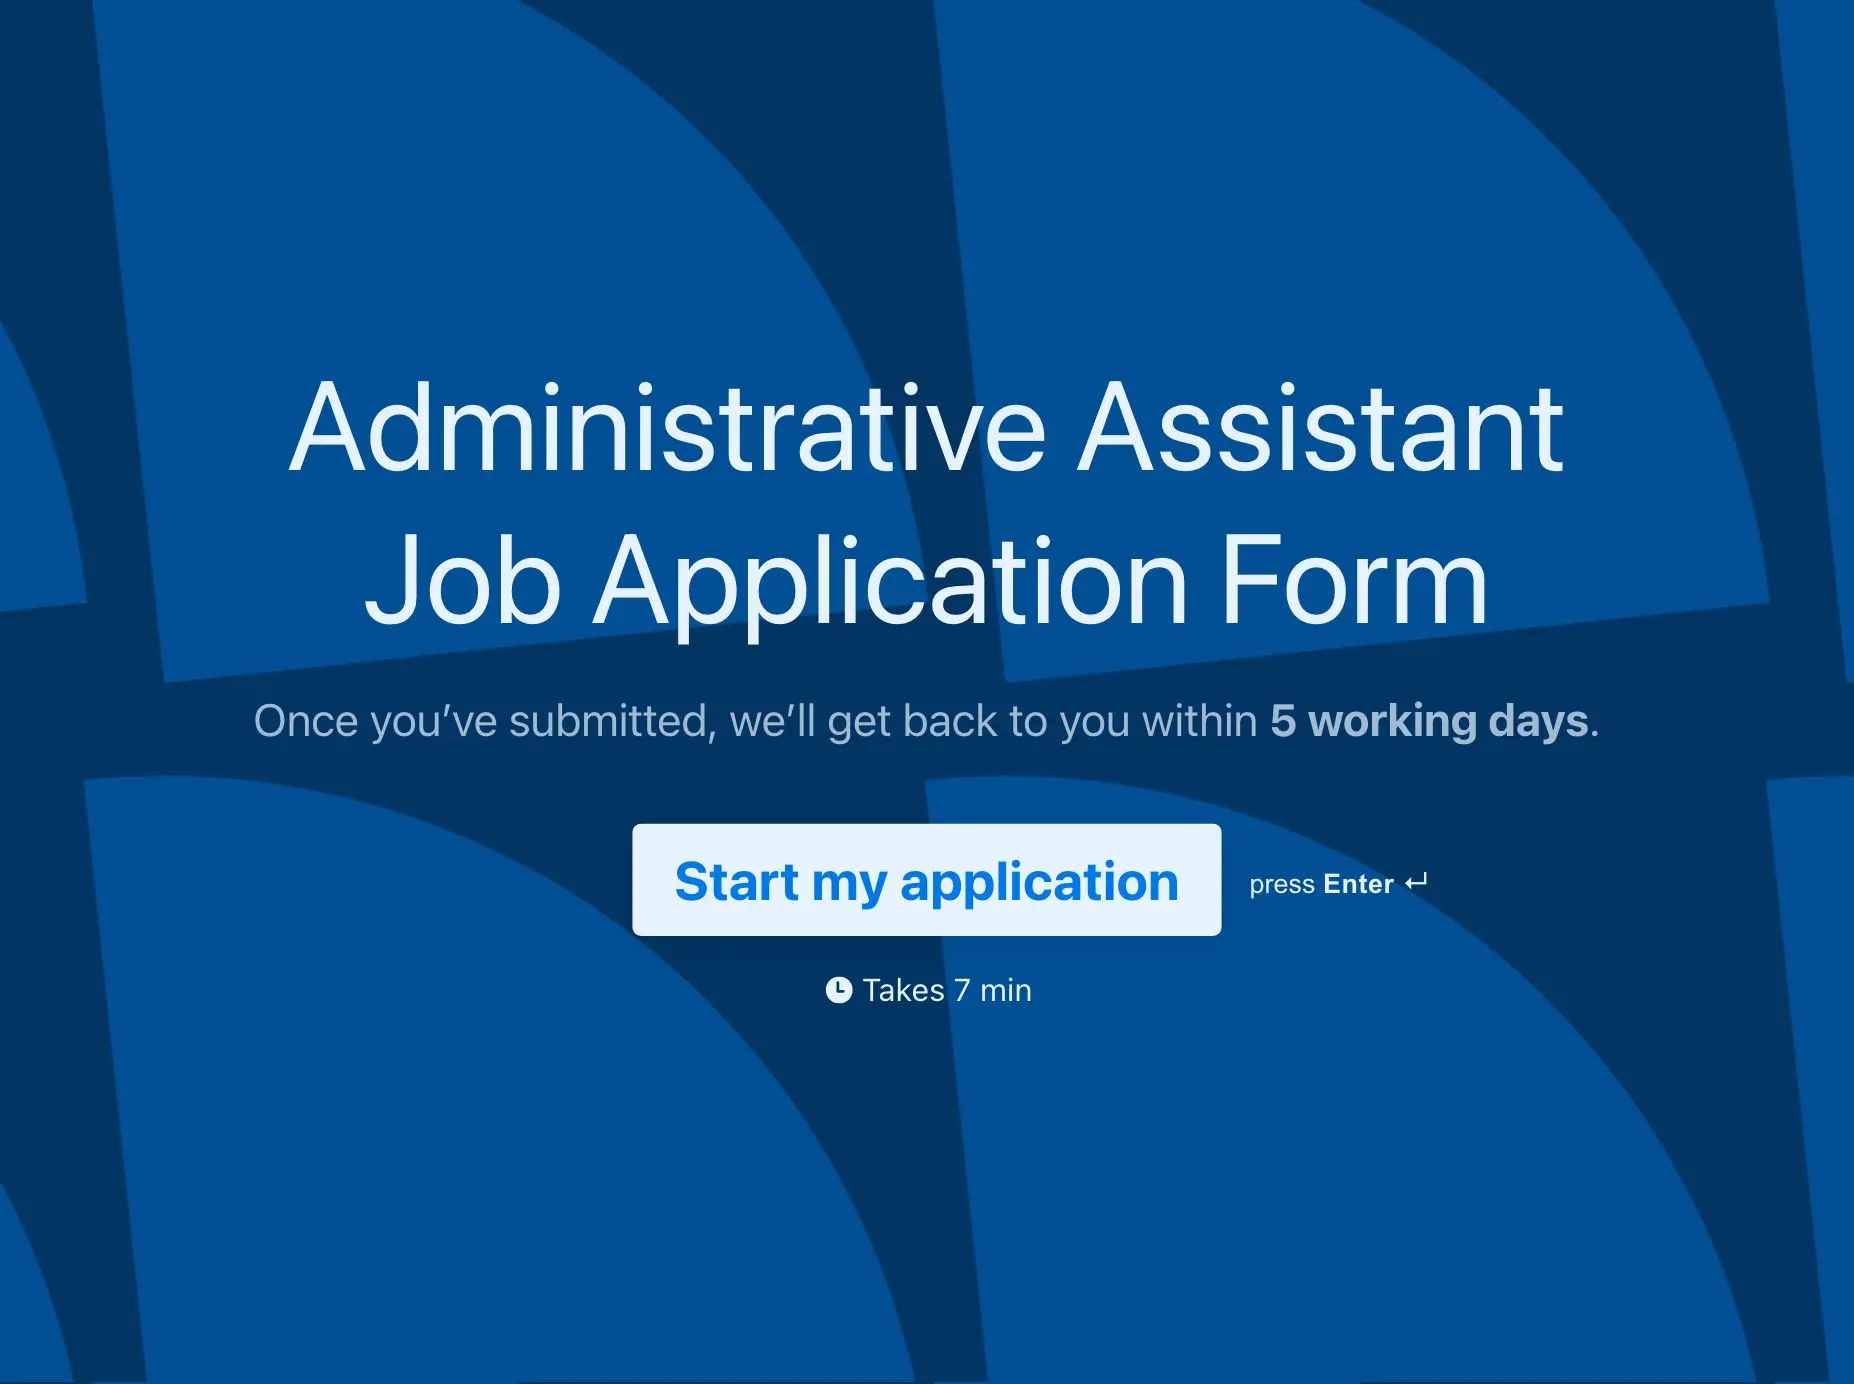 Administrative Assistant Job Application Form Template Hero